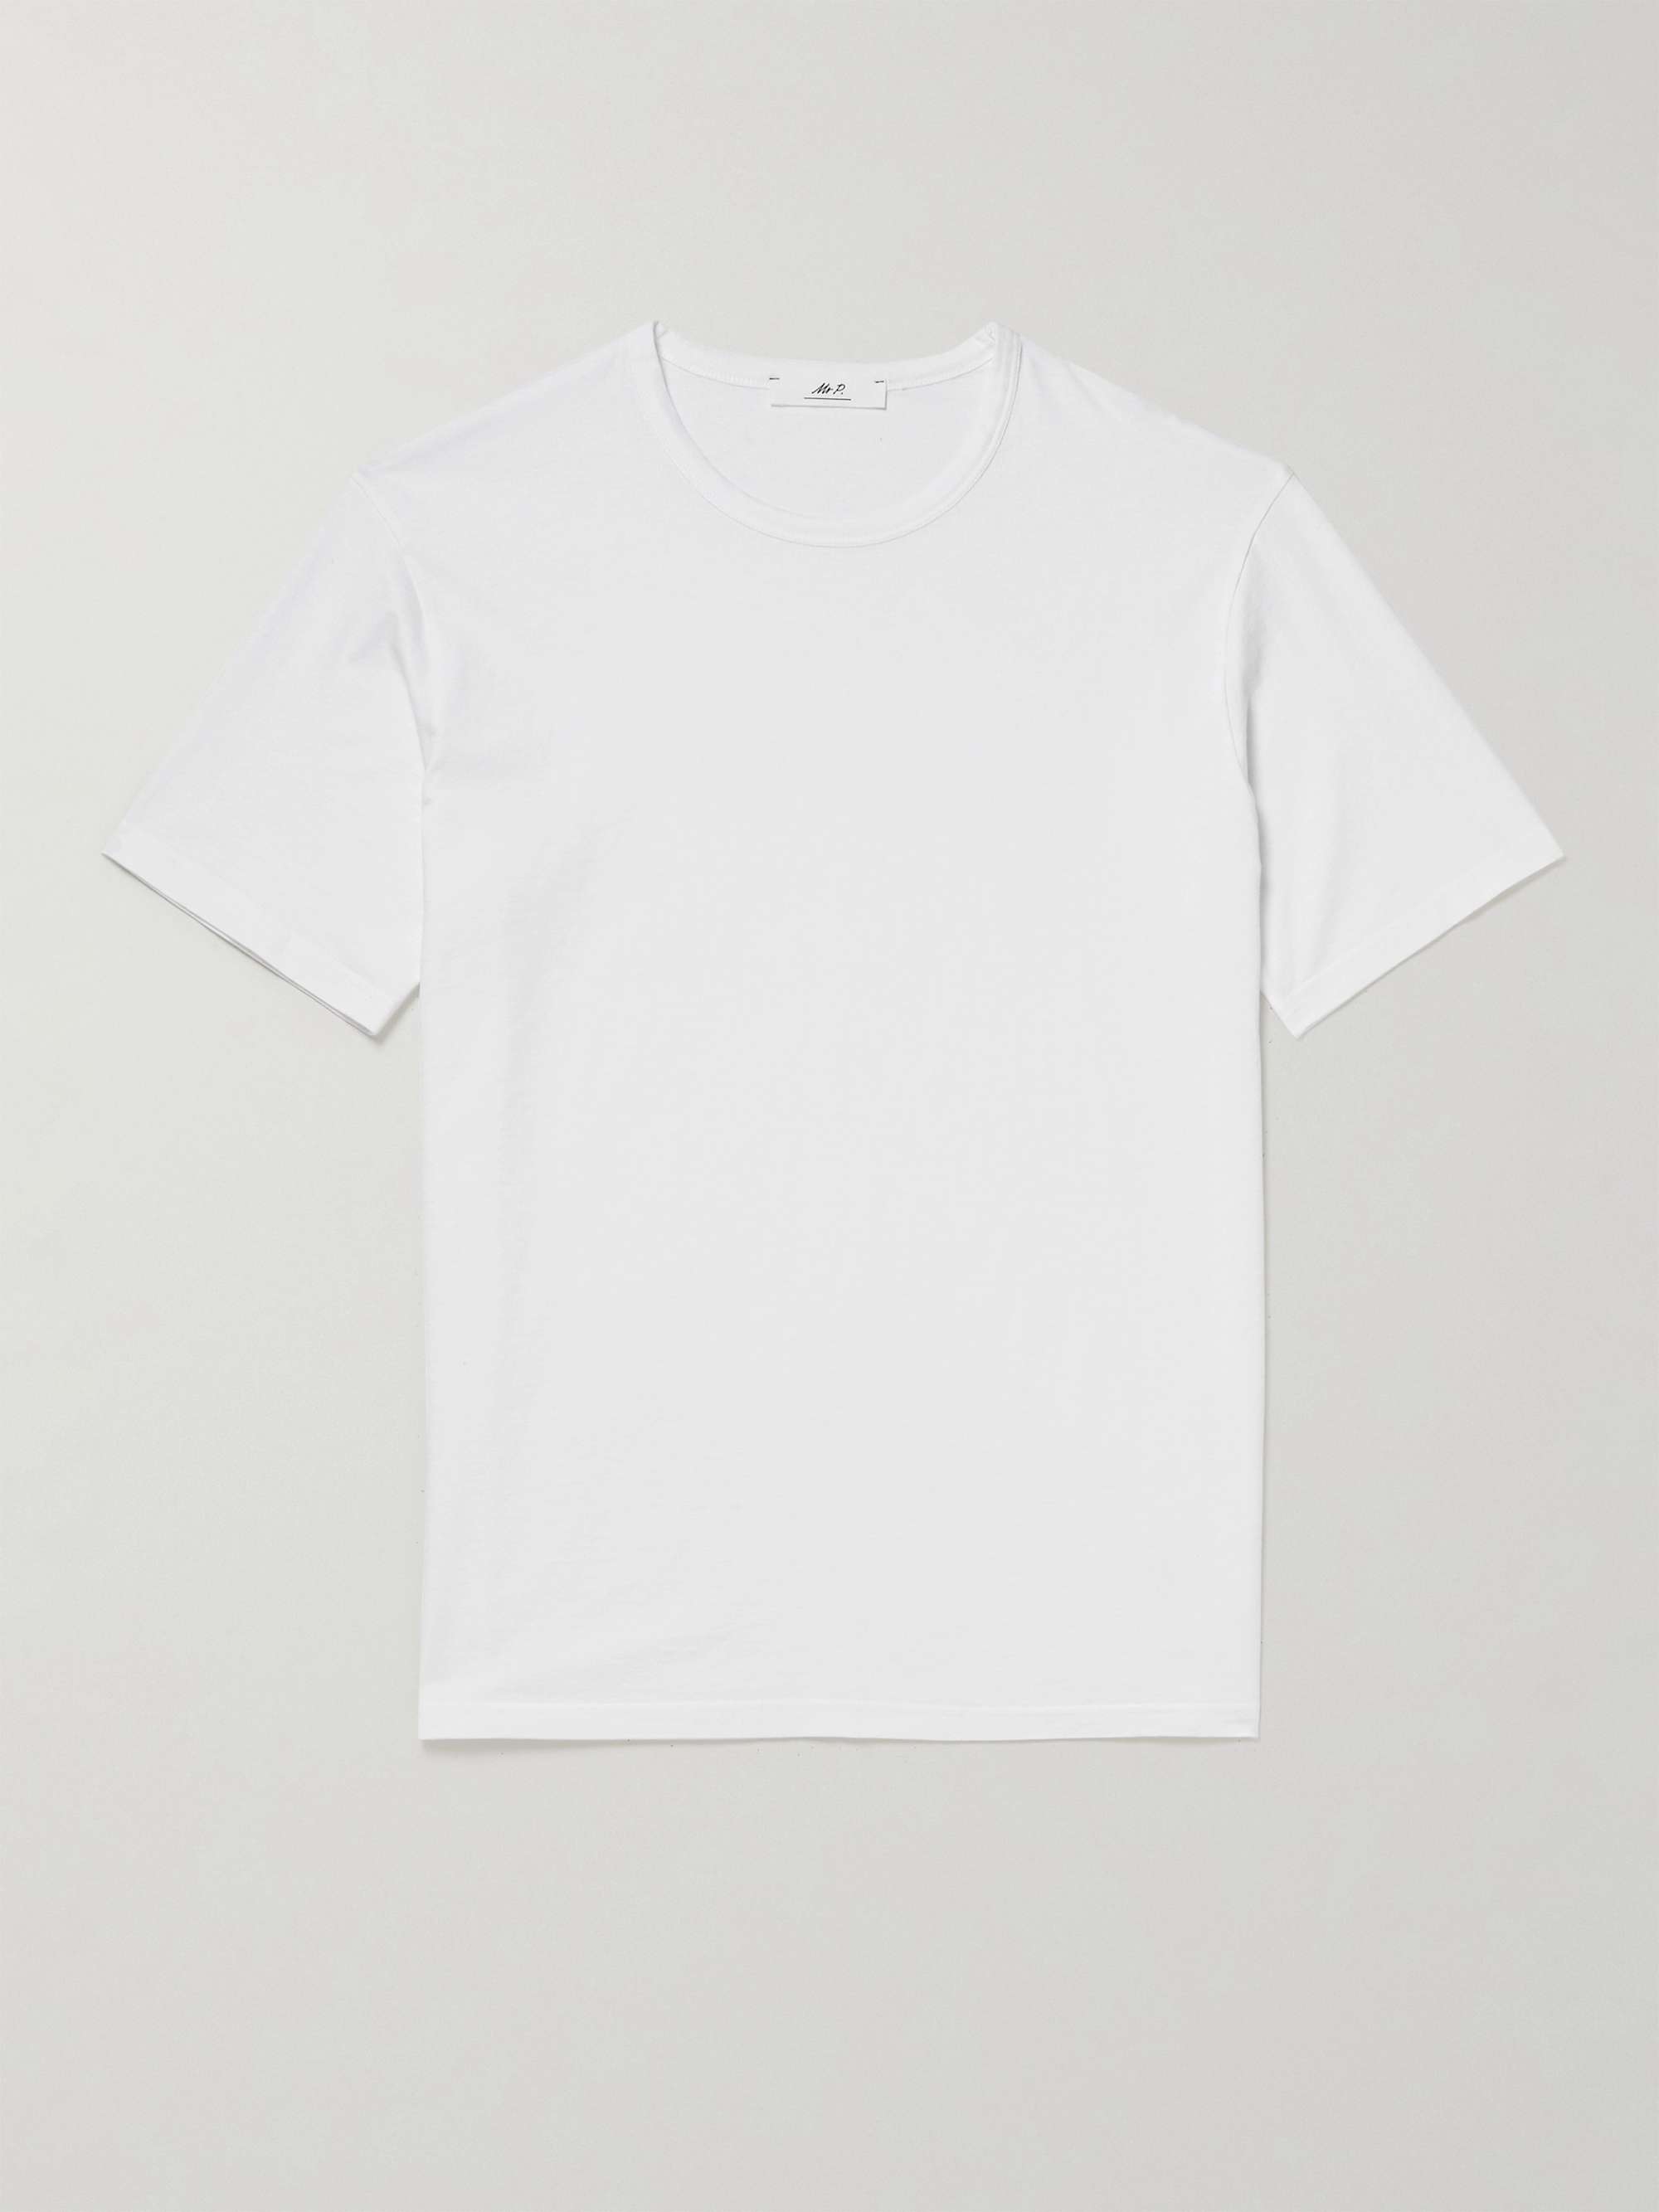 Voorstellen Zaklampen Riet MR P. Organic Cotton-Jersey T-Shirt | MR PORTER